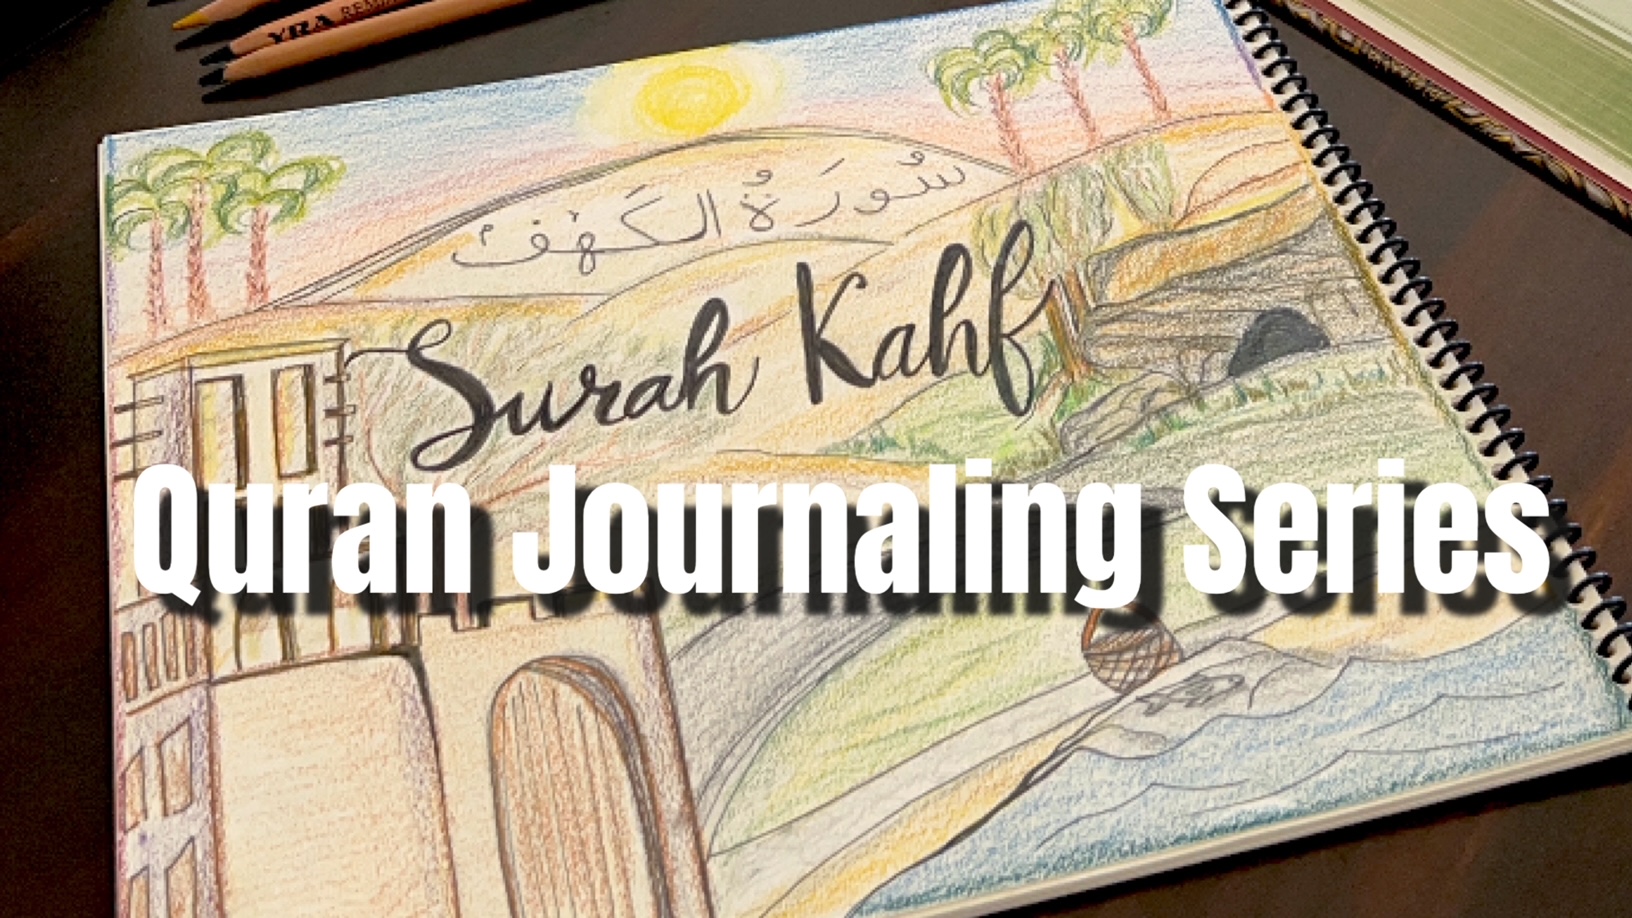 Quran Journaling for Surah Kahf